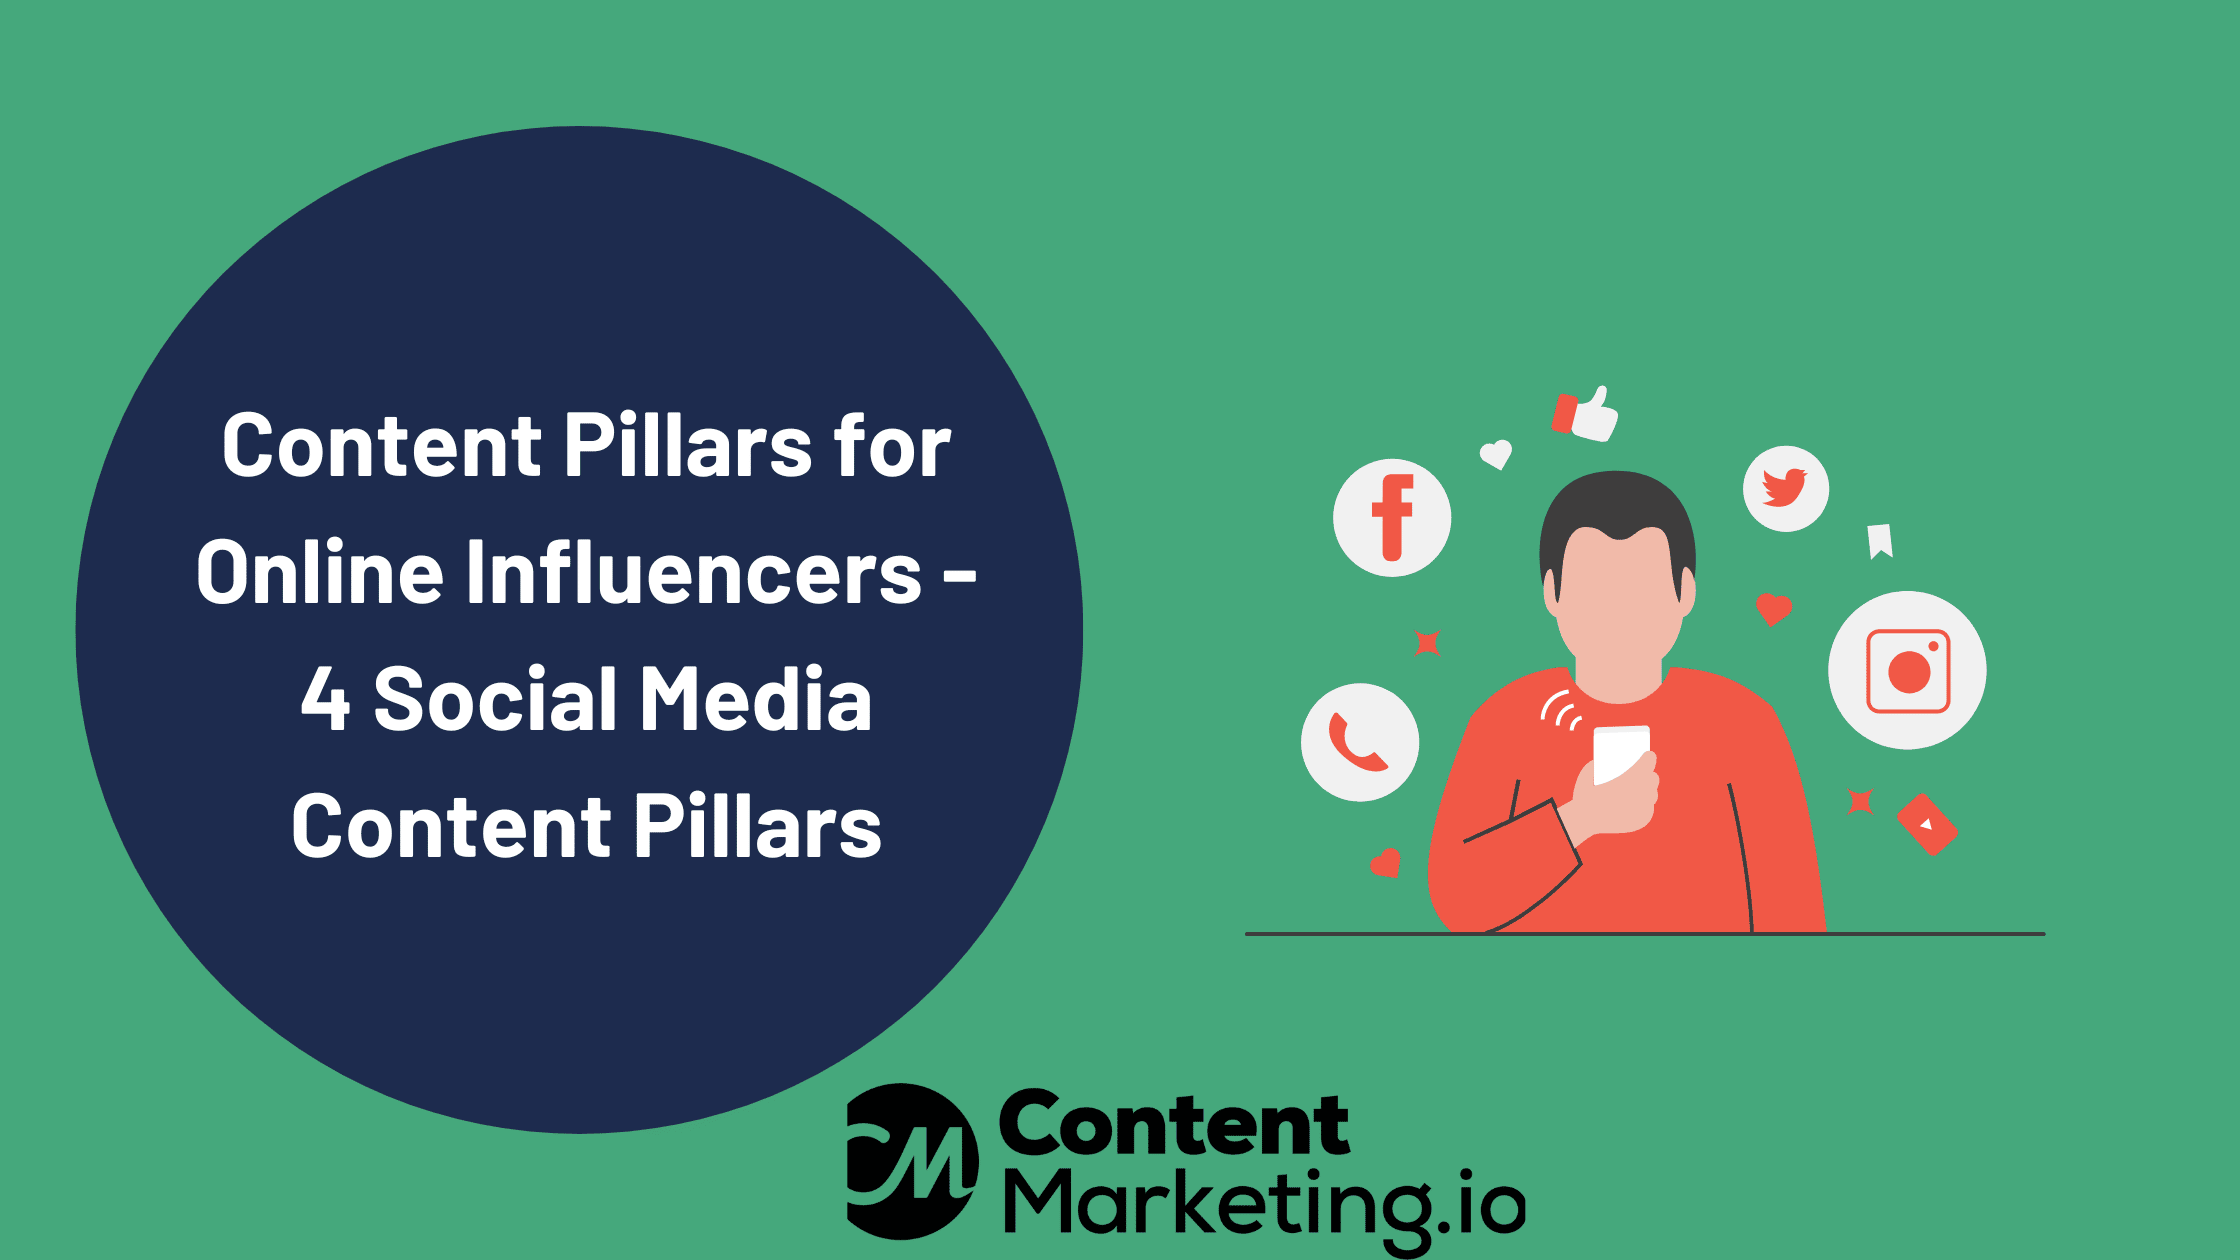 Content Pillars for Online Influencers - 4 Social Media Content Pillars